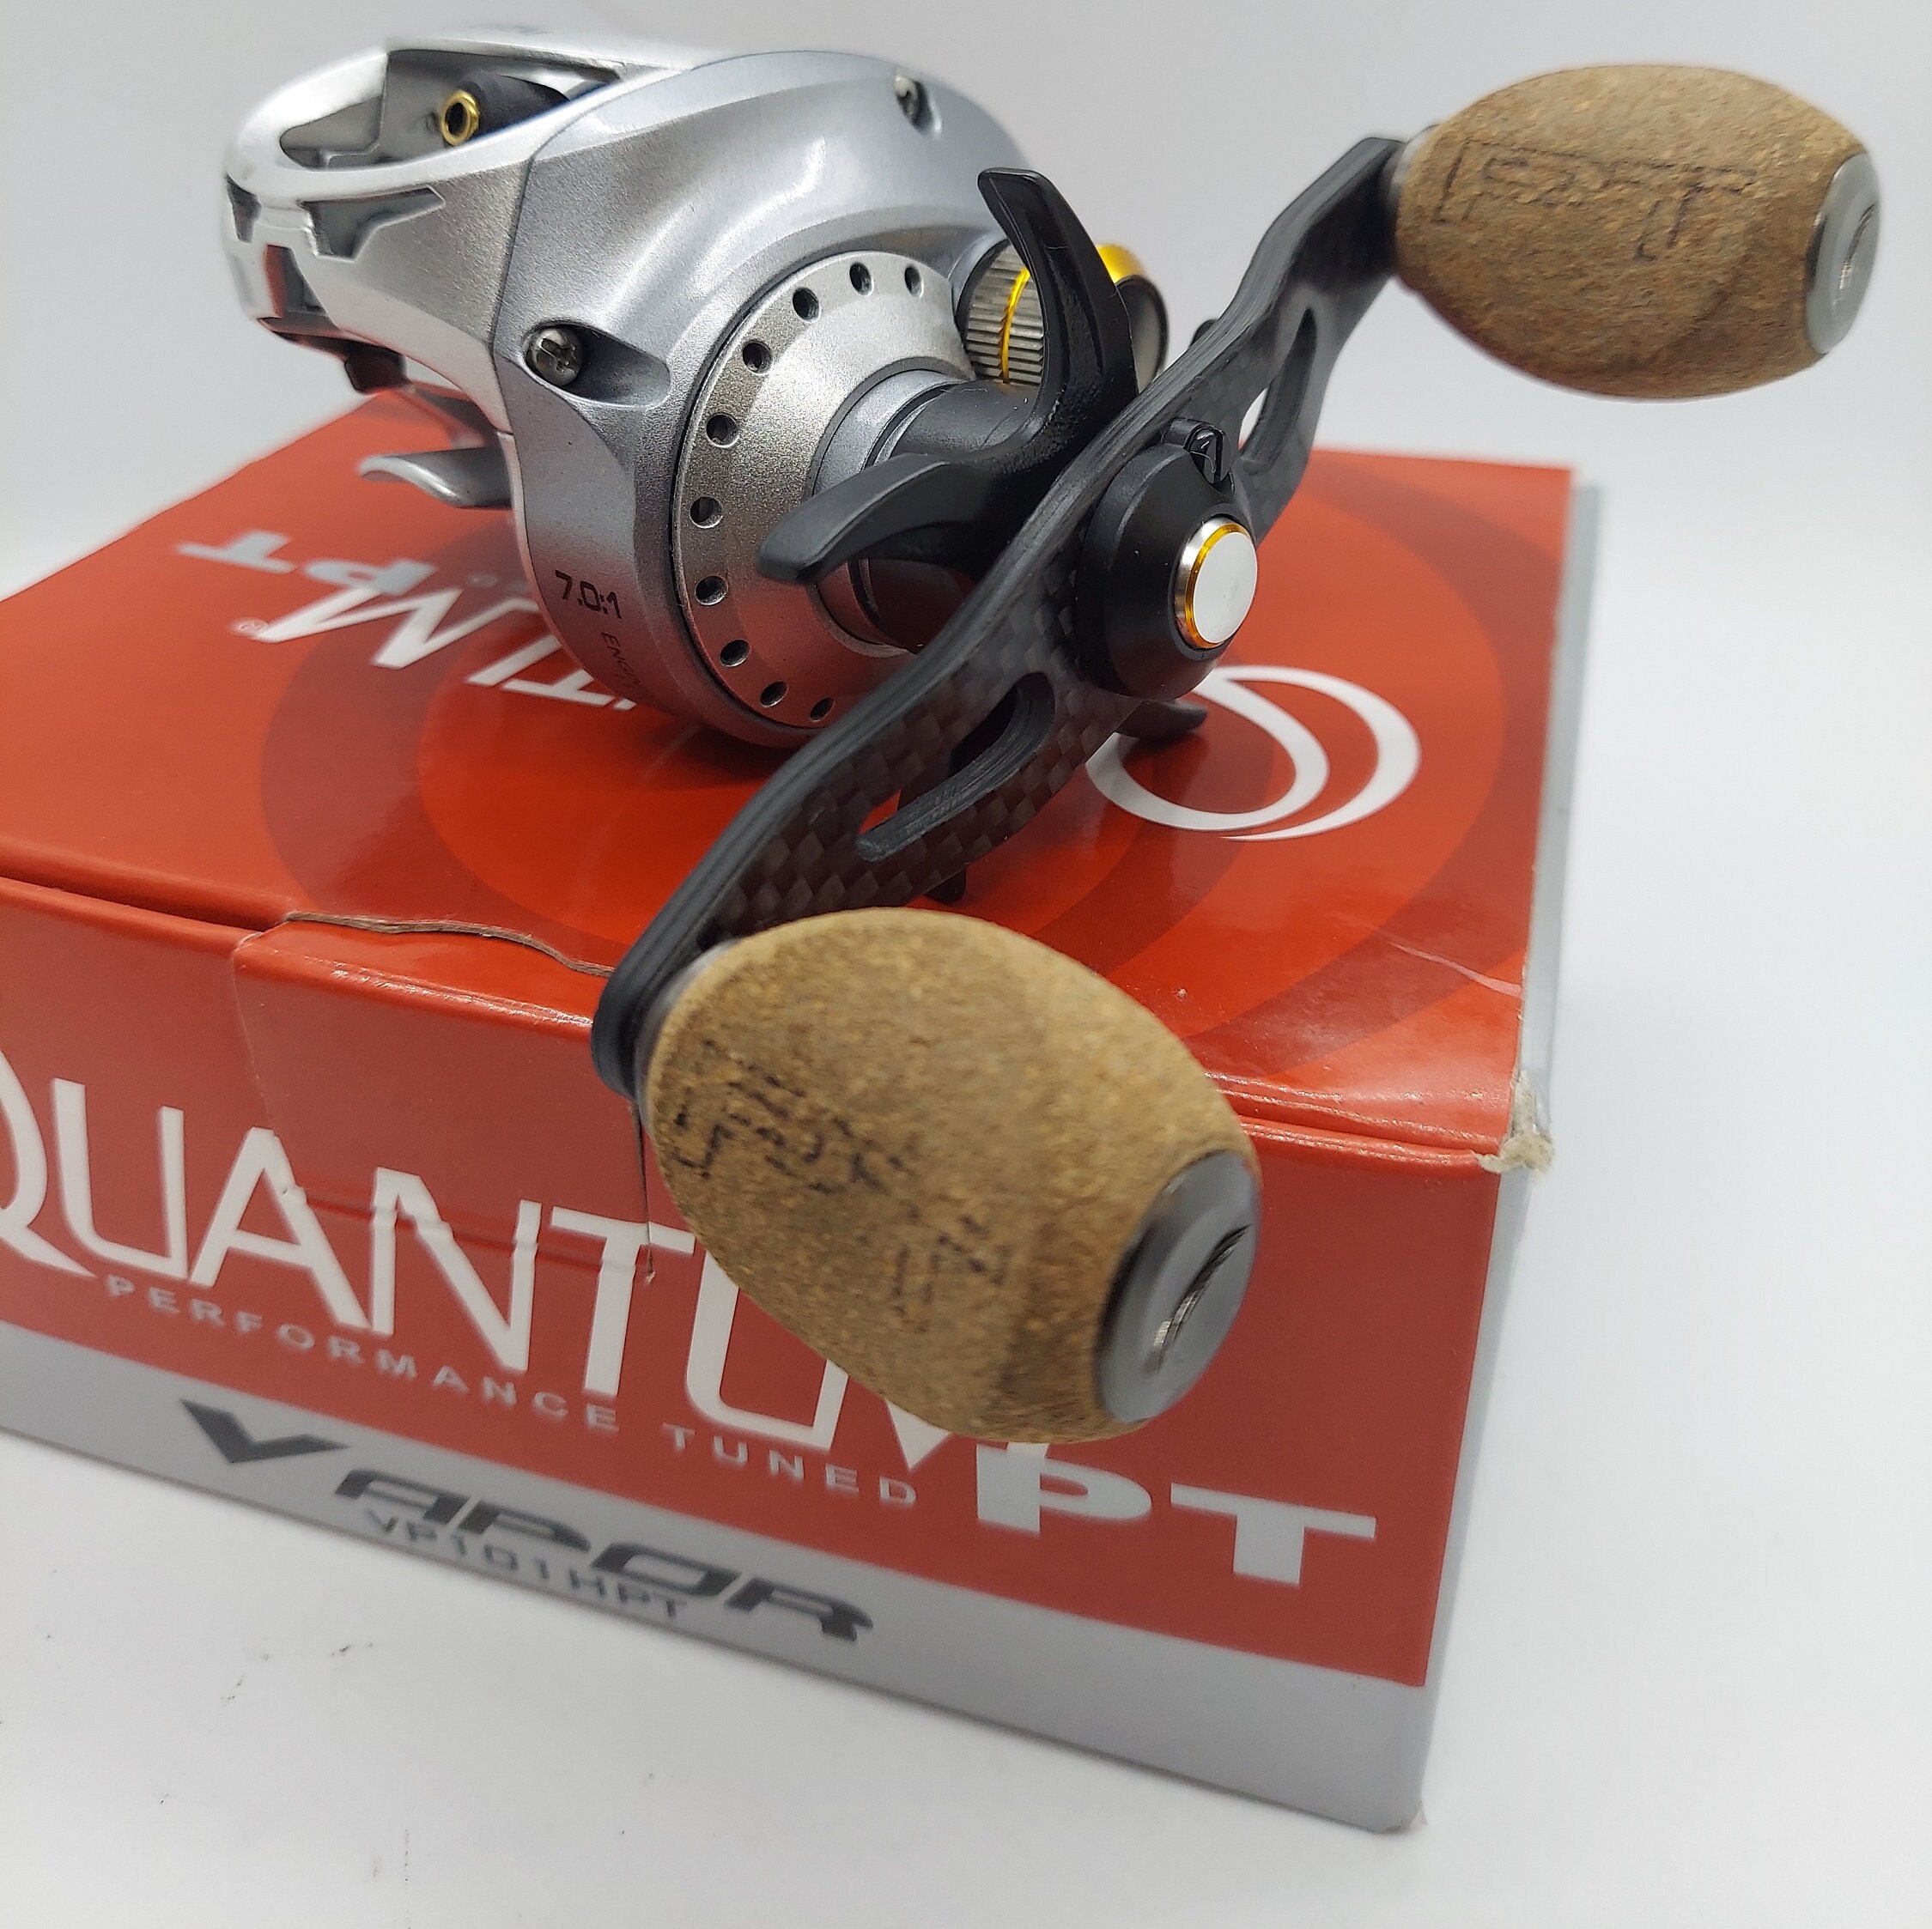 Quantum Fishing Reel 